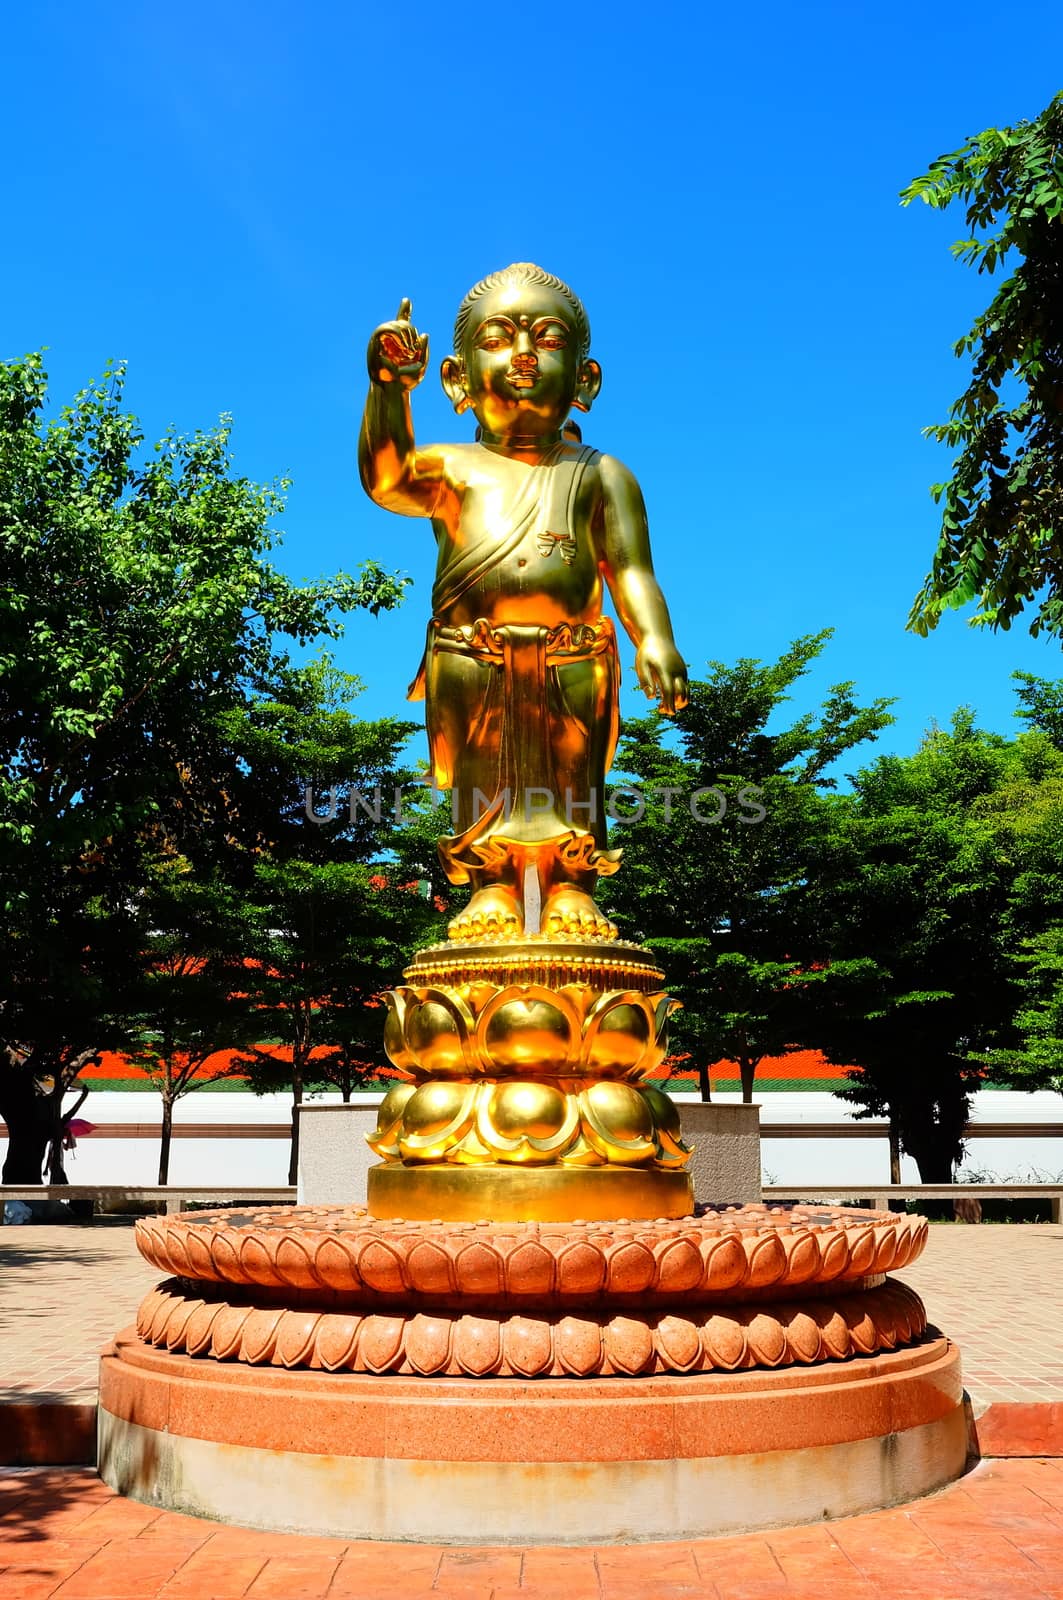 Golden Little Buddha Image in Park.